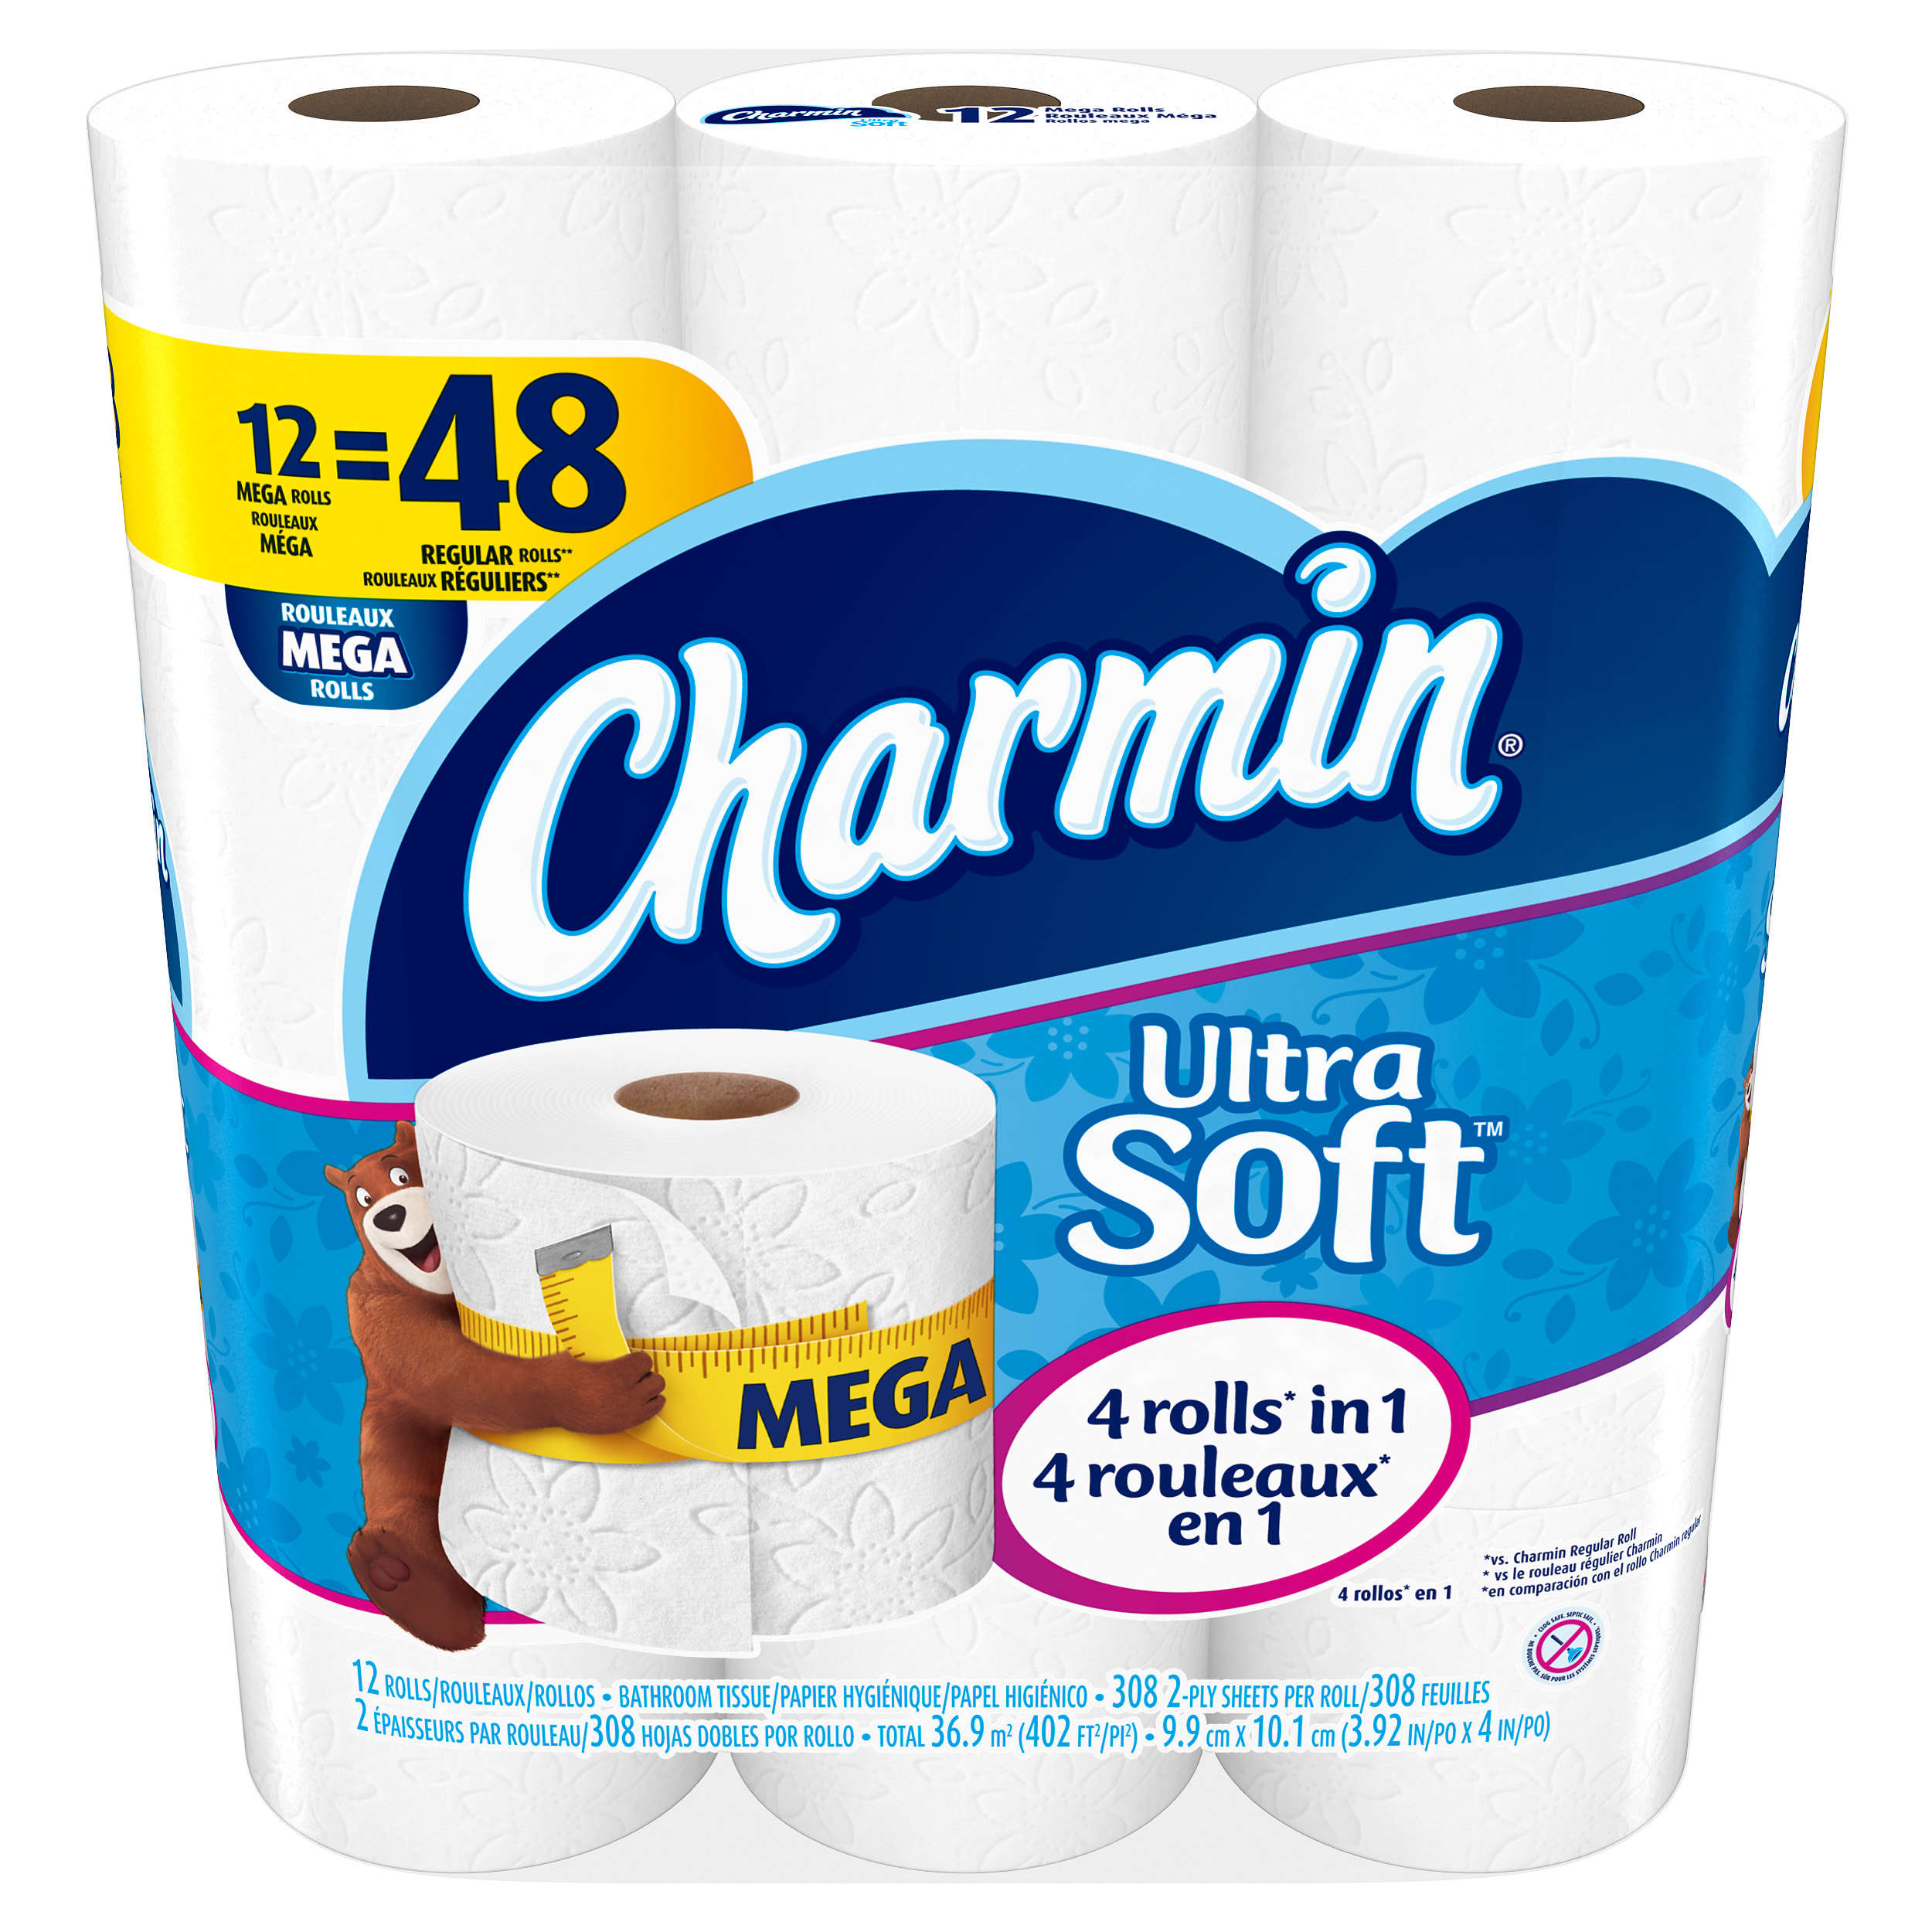 Charmin Ultra Soft Toilet Paper 12 Mega Rolls (Pack of 1) - image 3 of 6